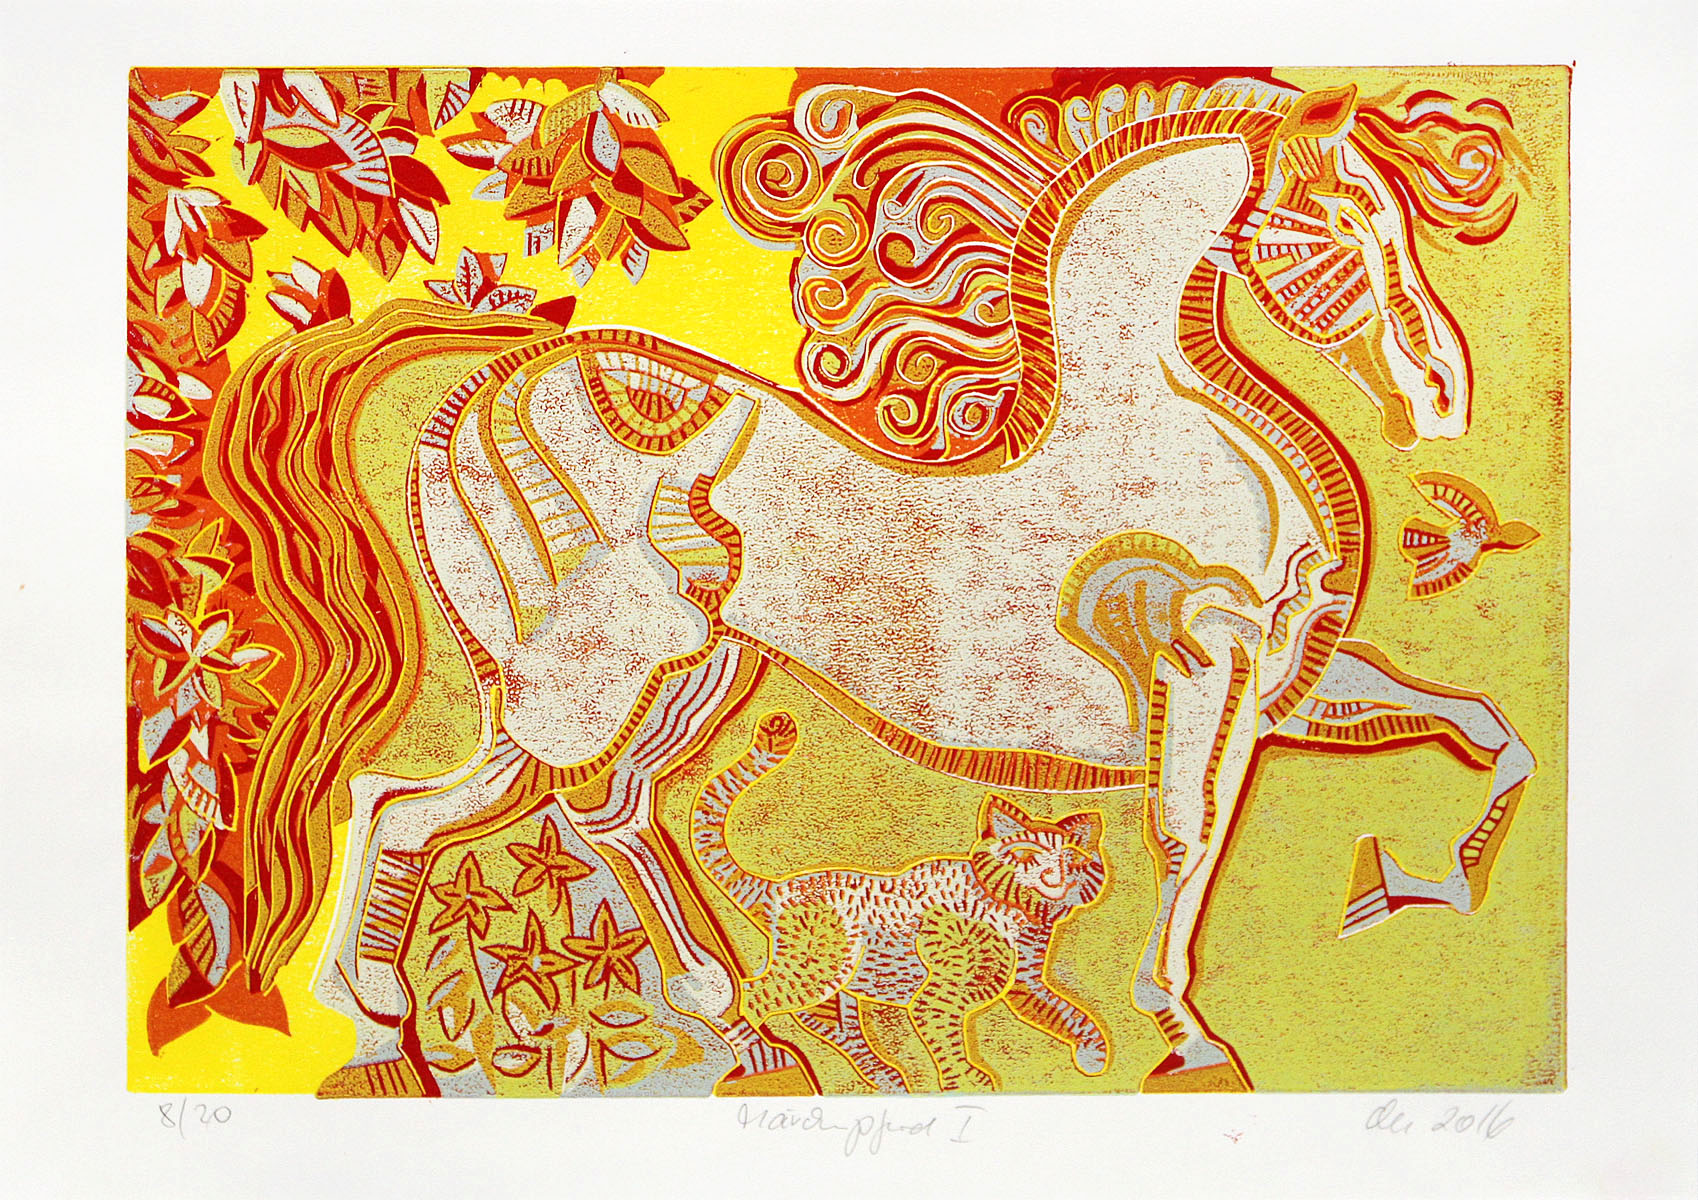 F.O. Haake: "Märchenpferd - Blatt 08/20", originale Grafik/serielles Unikat, mehrfarbiger Linoldruck